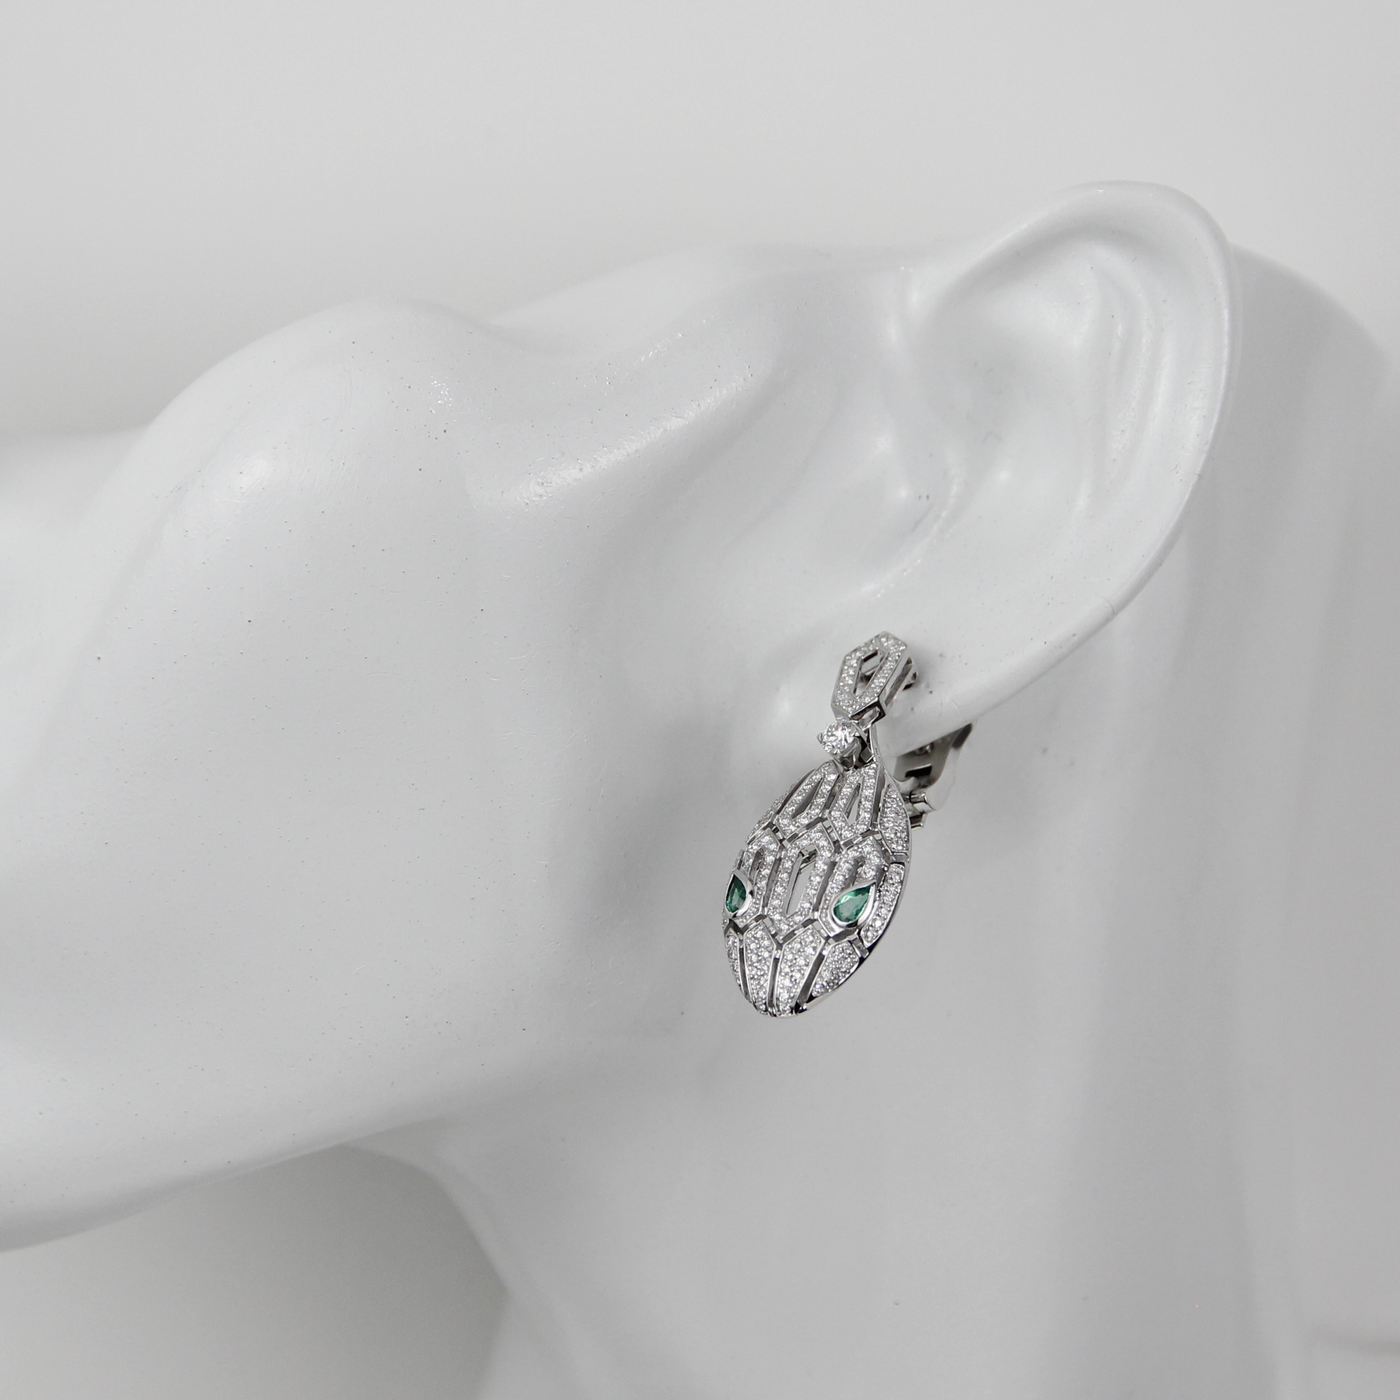 Bulgari Serpenti 18K White Gold Diamond & Emerald Earrings